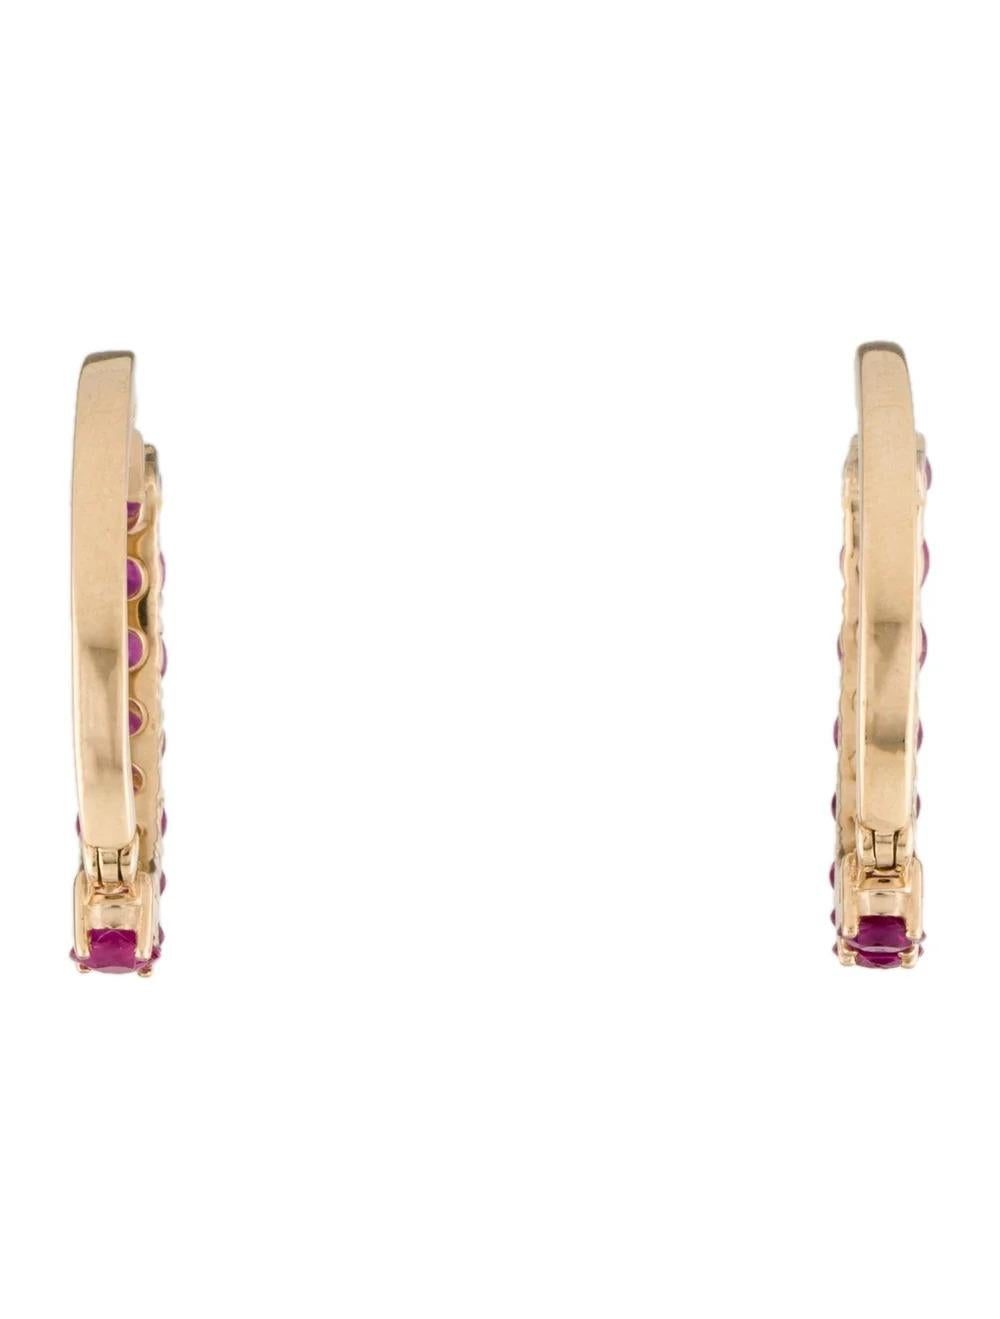 Round Cut 14K Ruby Hoop Earrings - Elegant Red Gemstones, Timeless Style Statement Jewelry For Sale